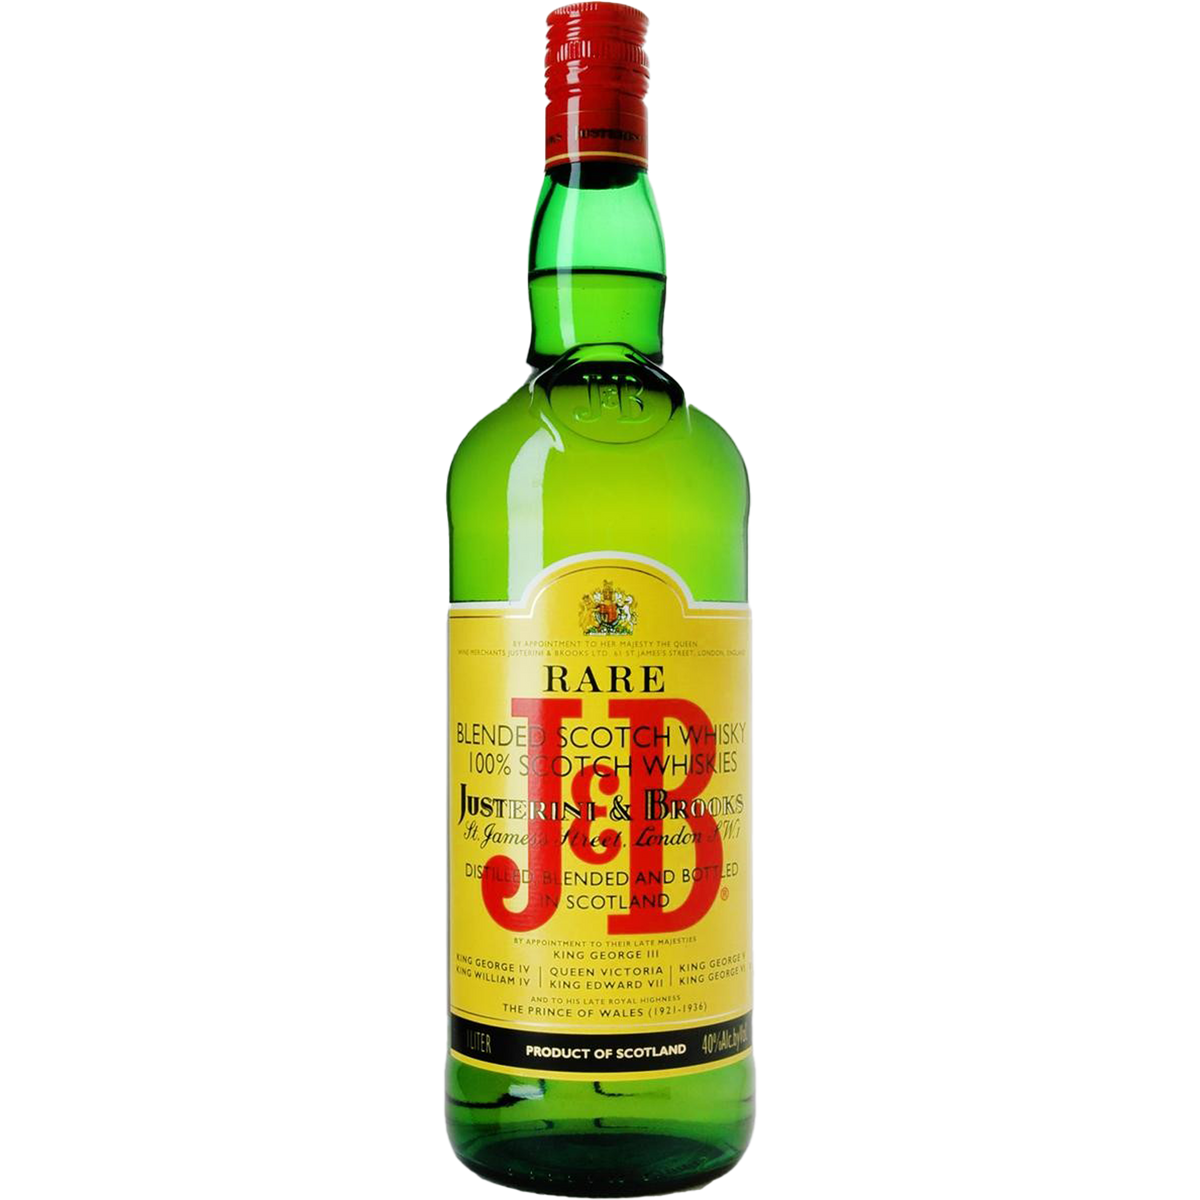 J&B Rare Blended Scotch - 375ml